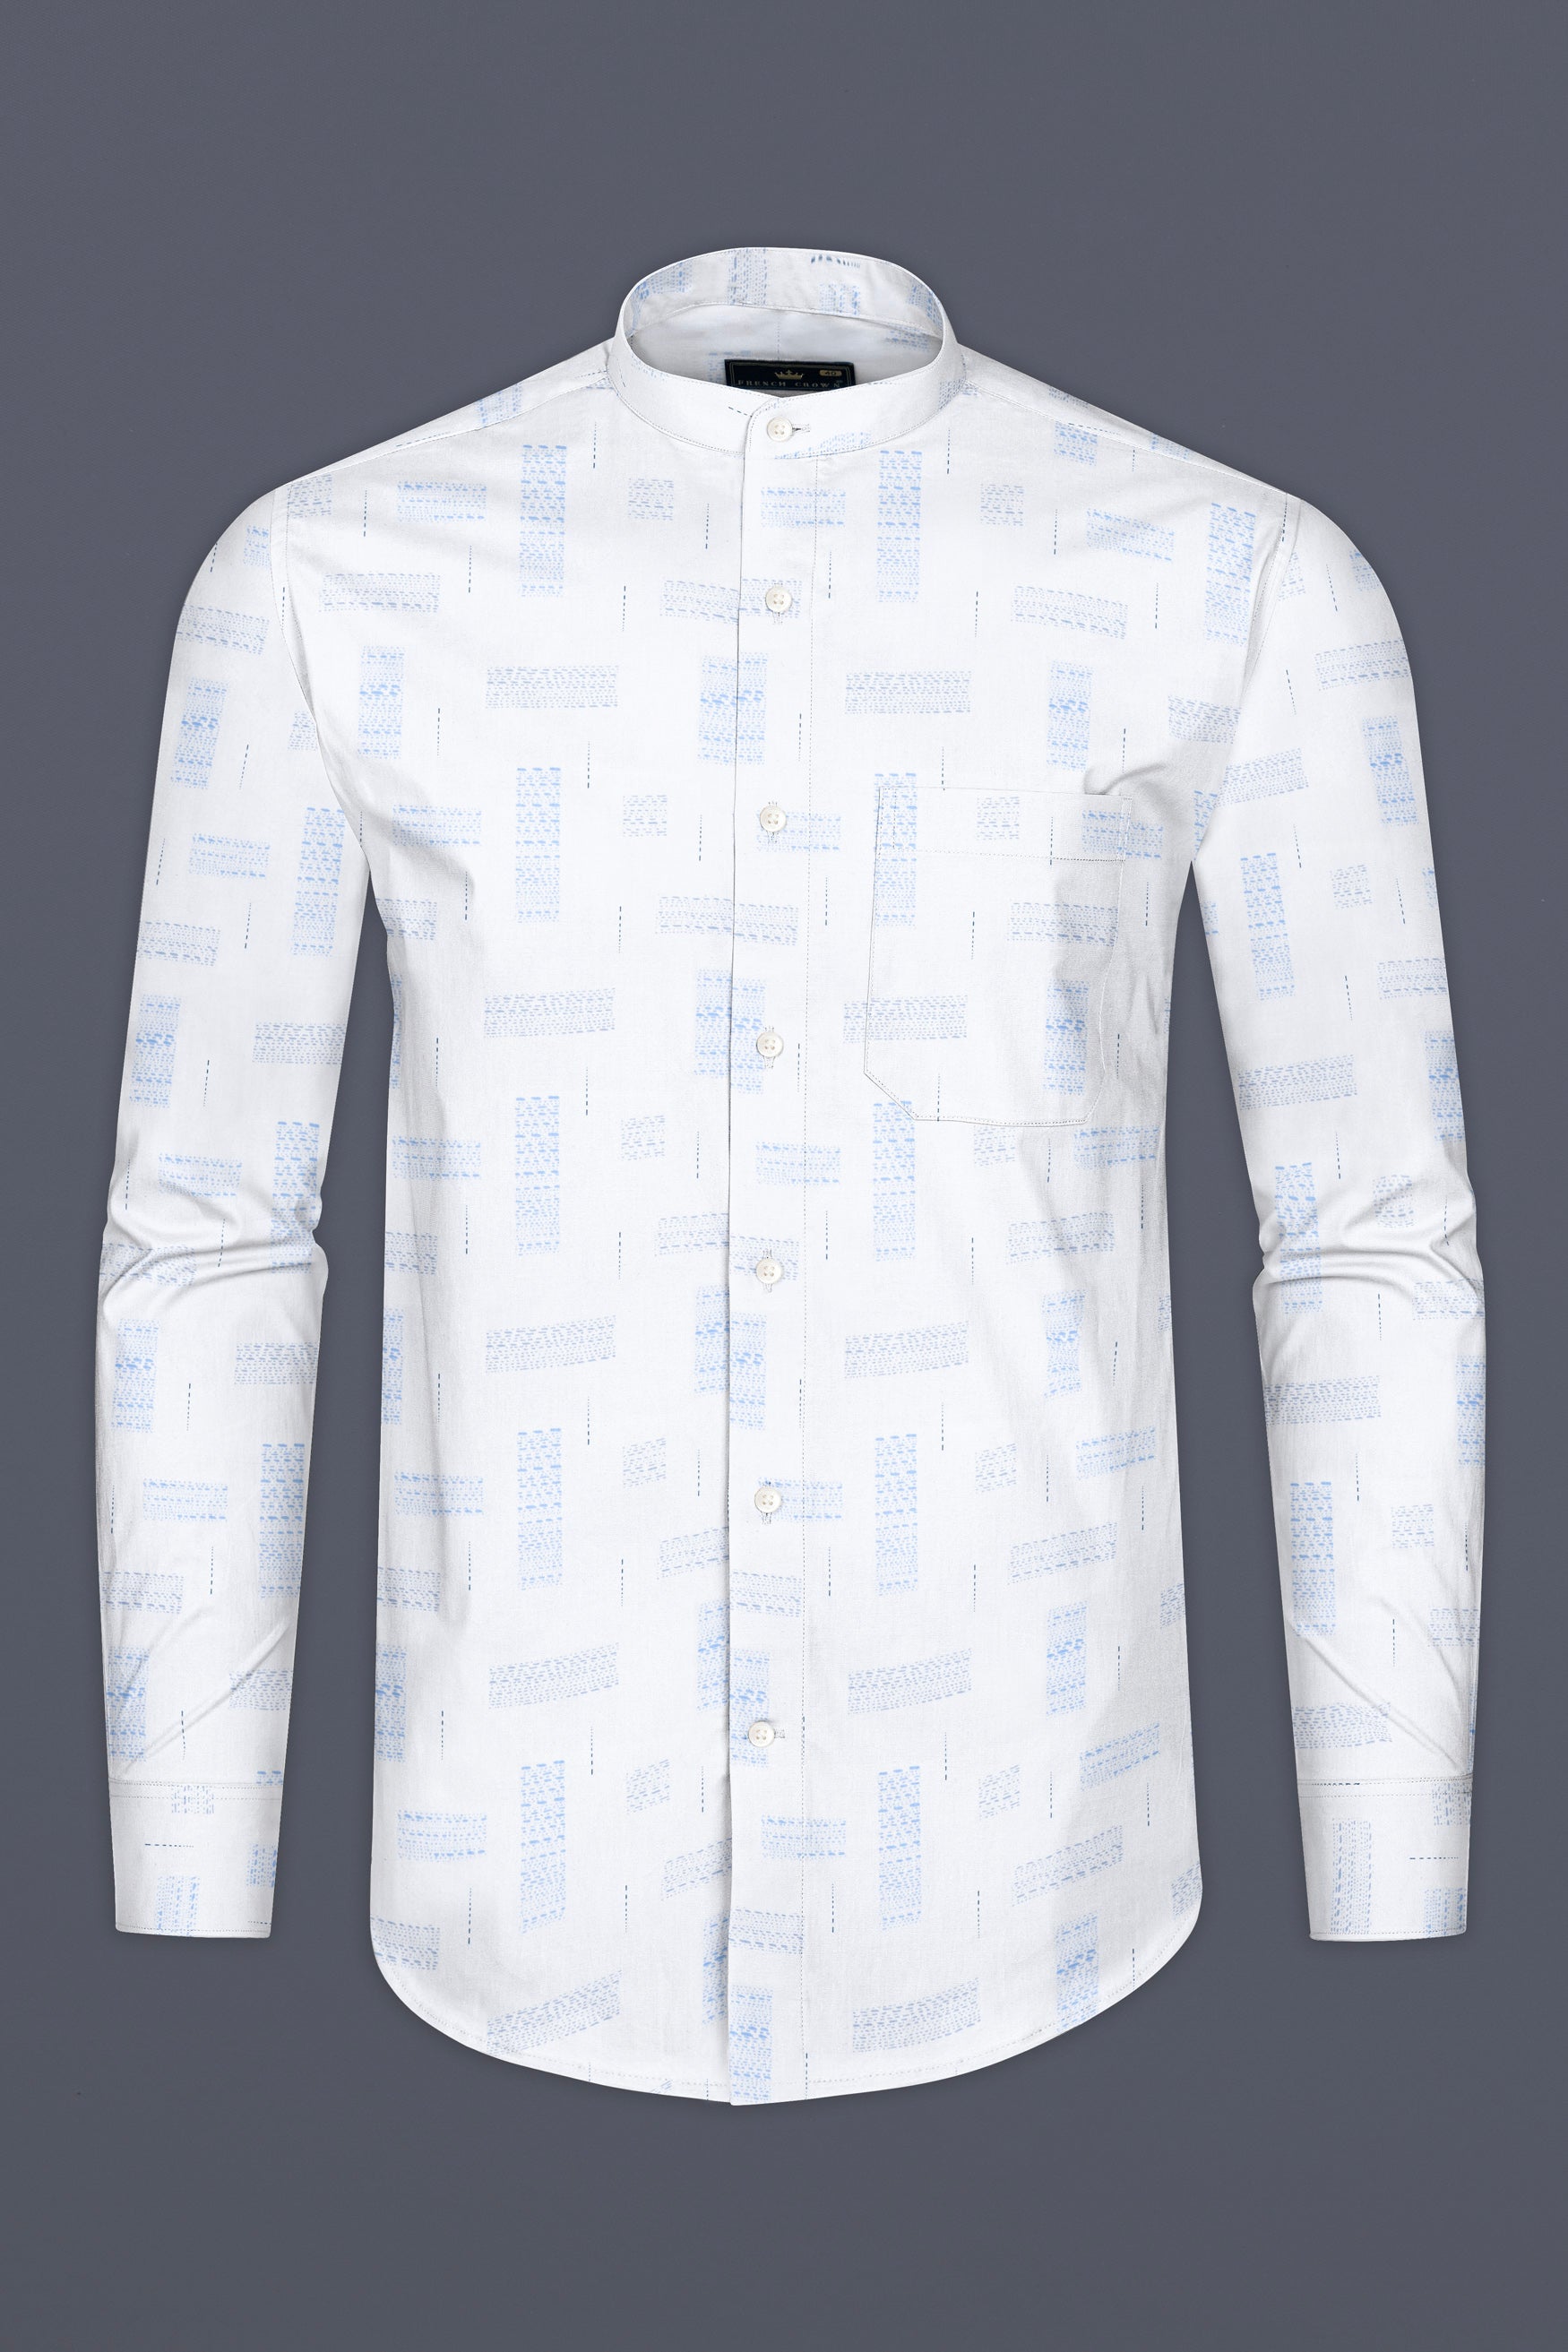 Bright White with Polo Blue Textured Subtle Sheen Super Soft Premium Cotton Shirt